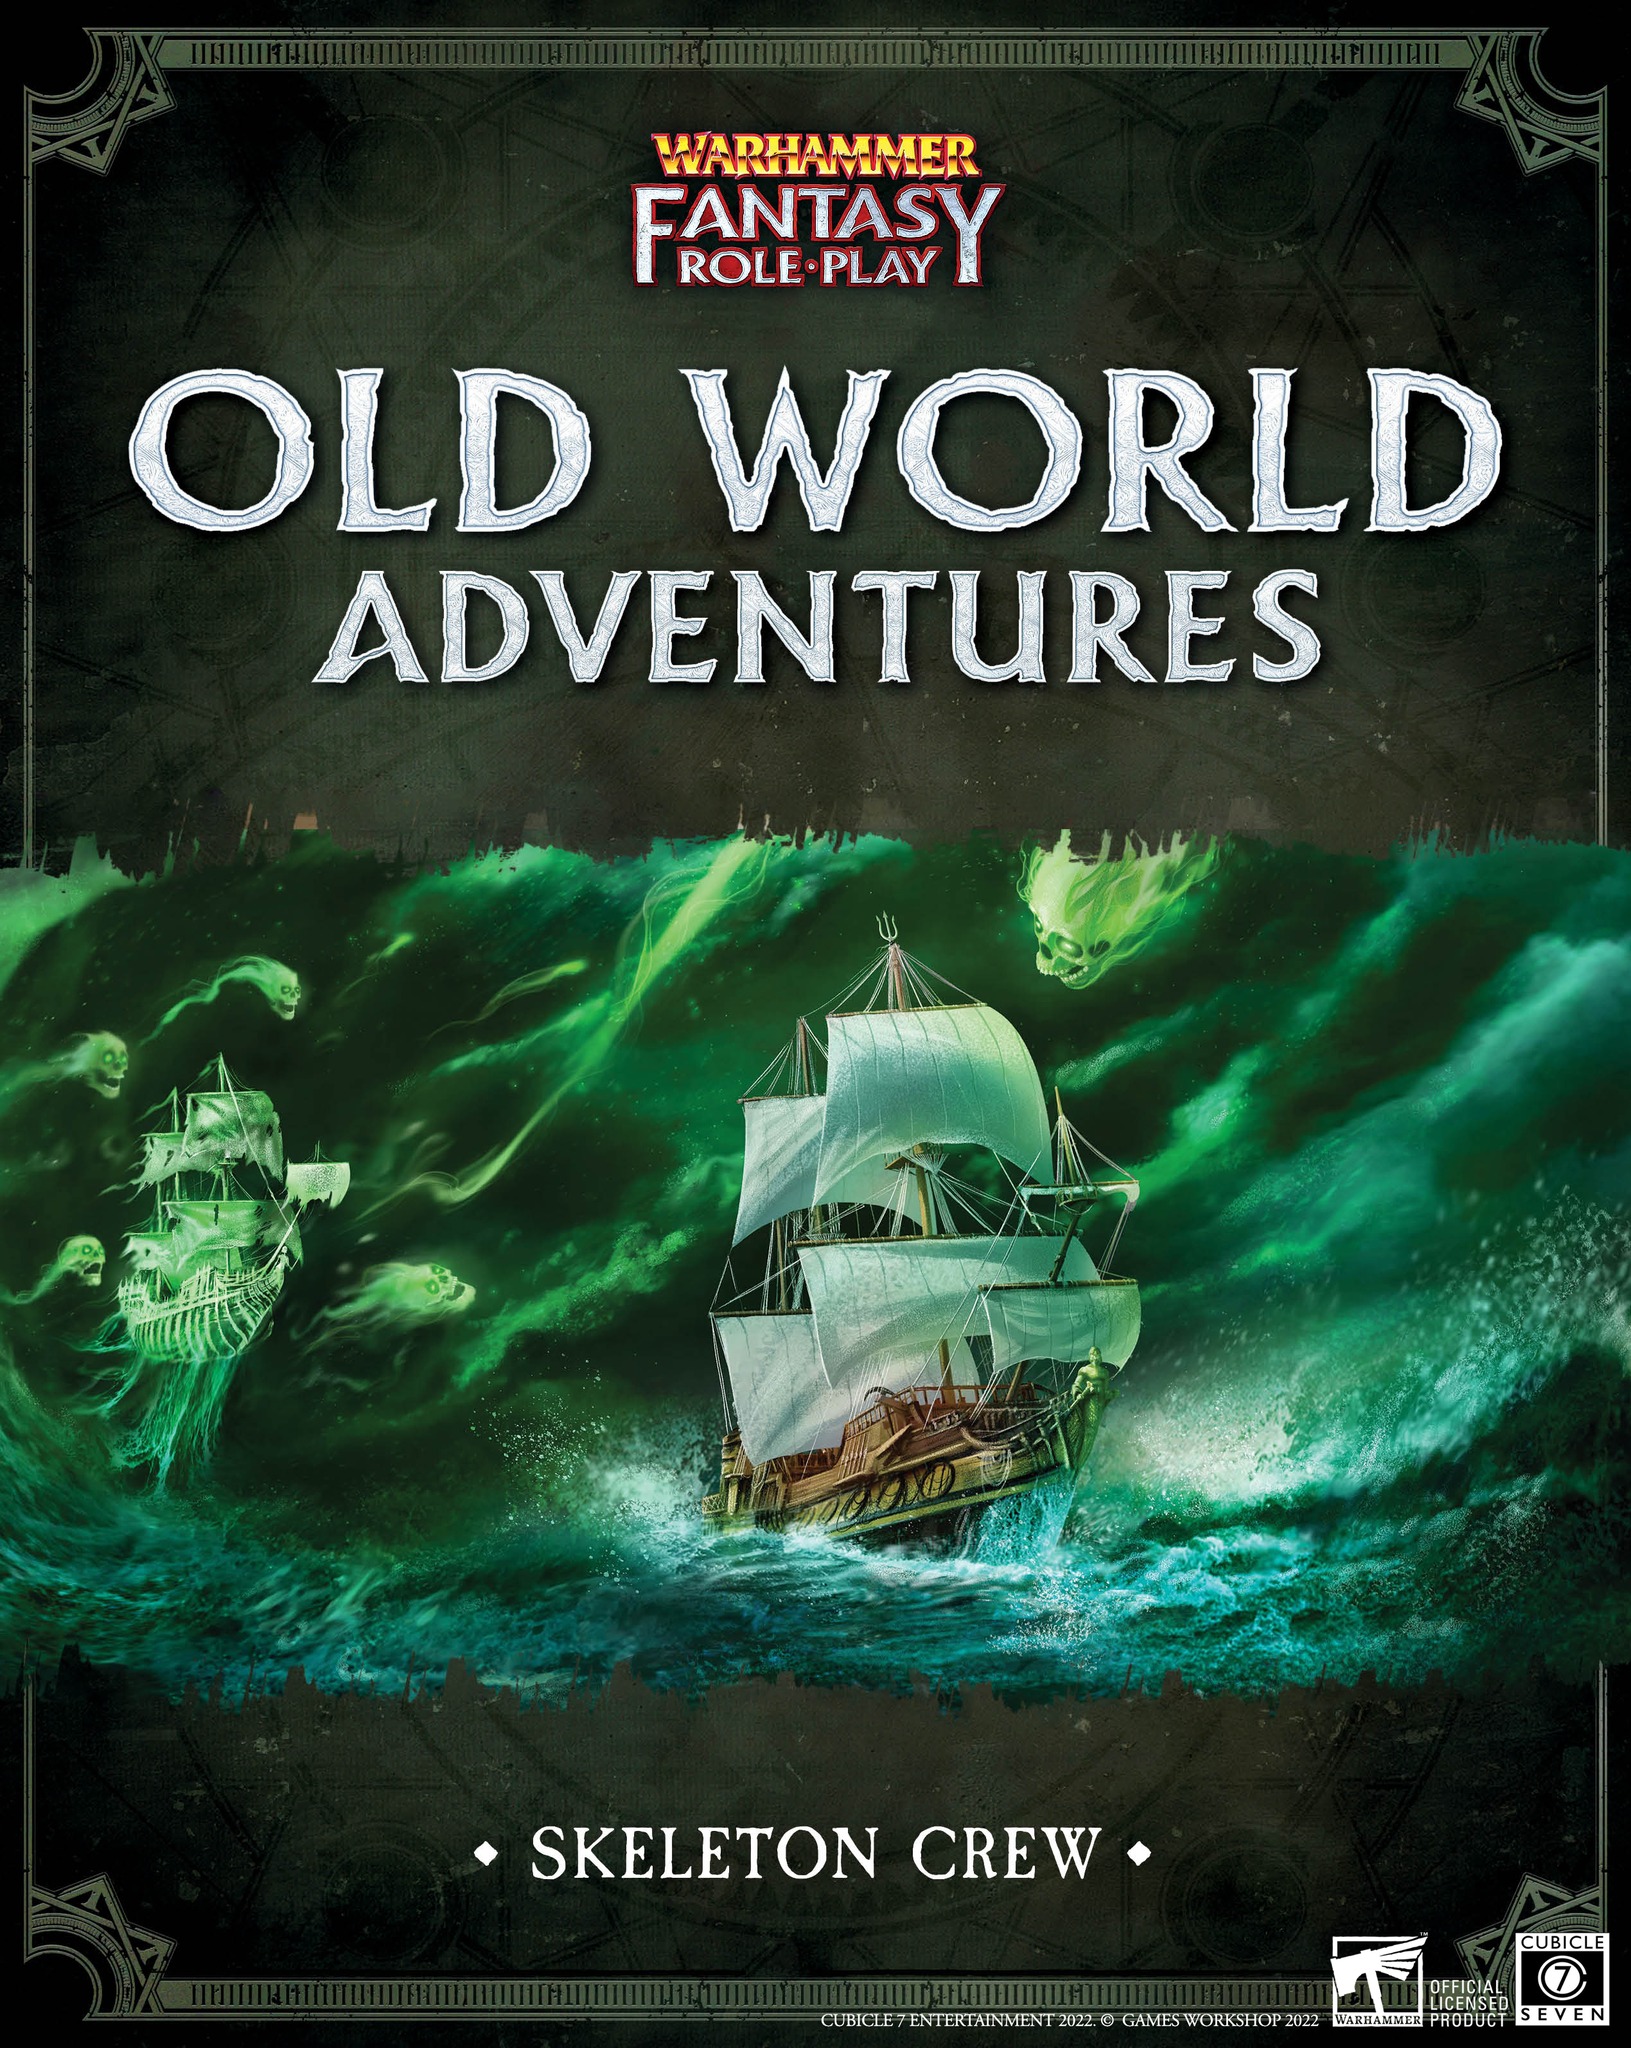 Old World Adventures - Skeleton Crew - Warhammer Fantasy Role-Play